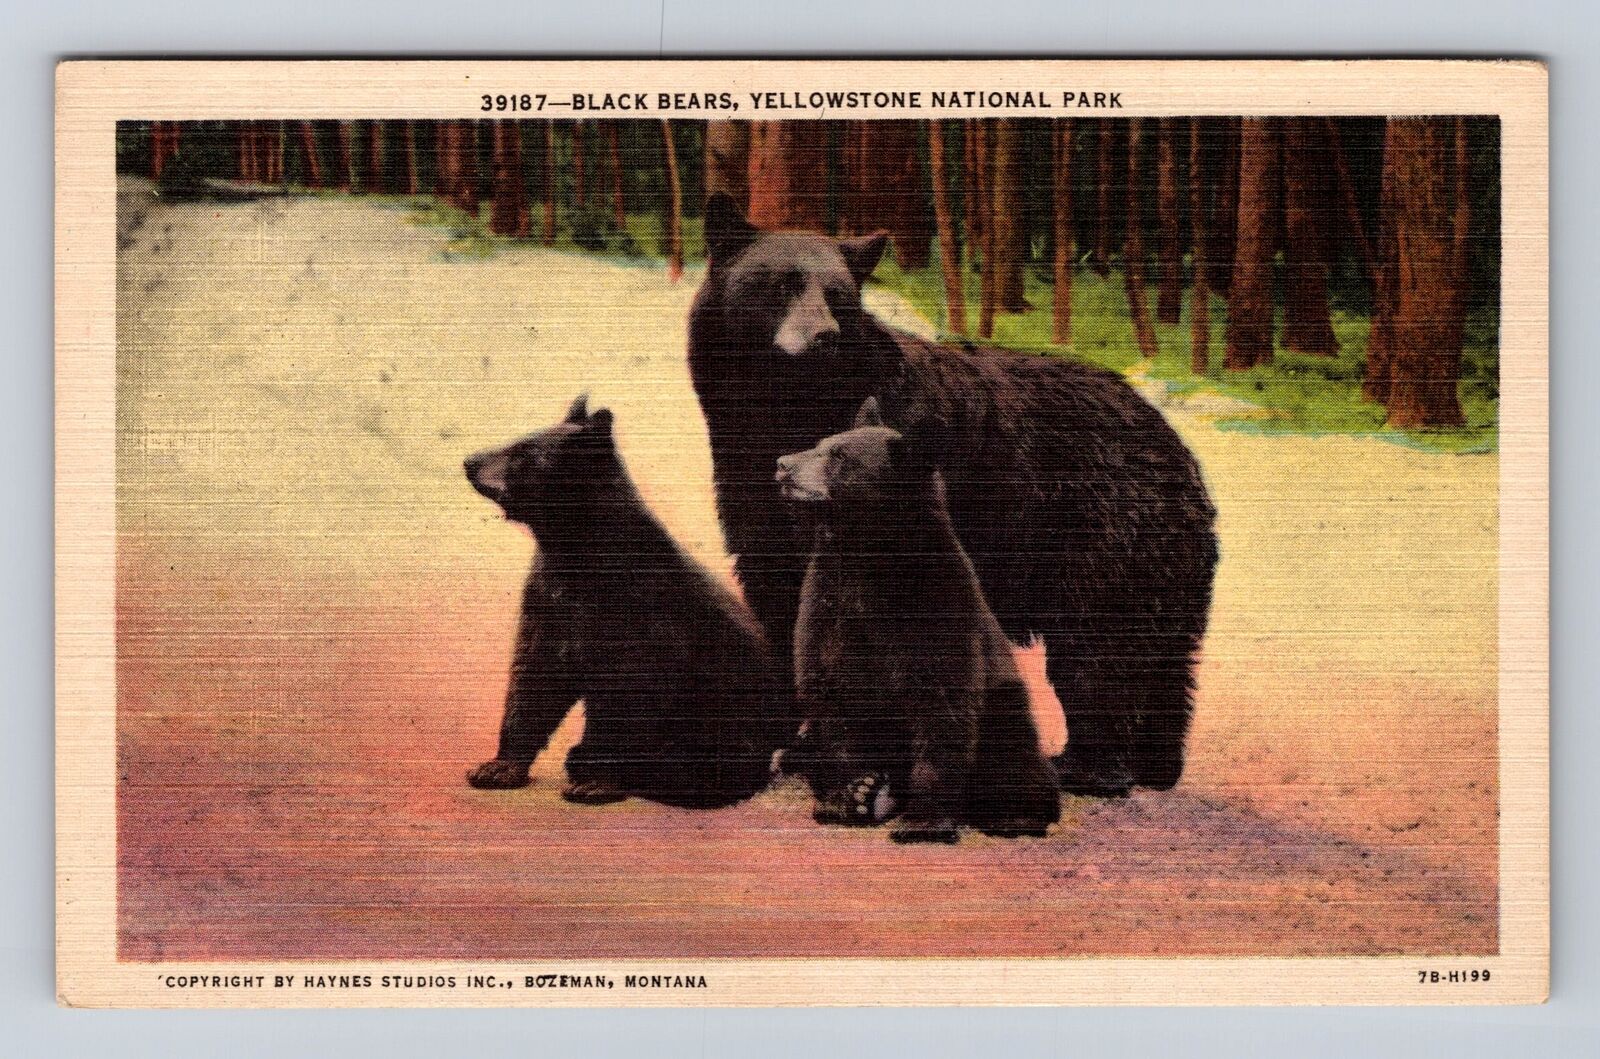 Yellowstone National Park, Black Bears, Series #39187, Antique, Vintage Postcard